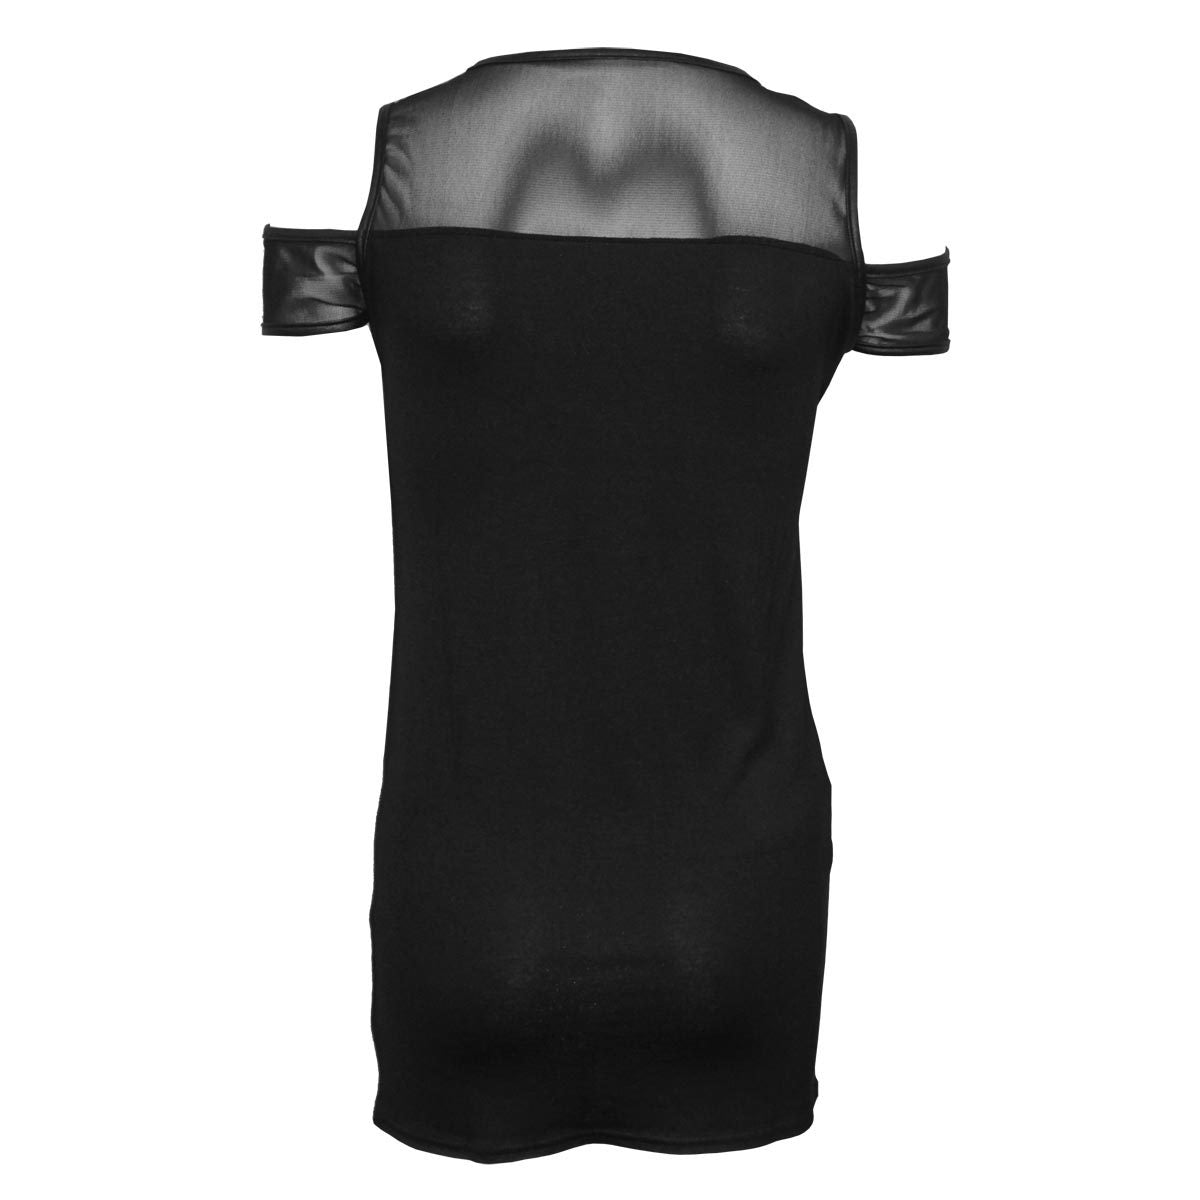 Gothic & Elegant - Drop Sleeve Black Dress